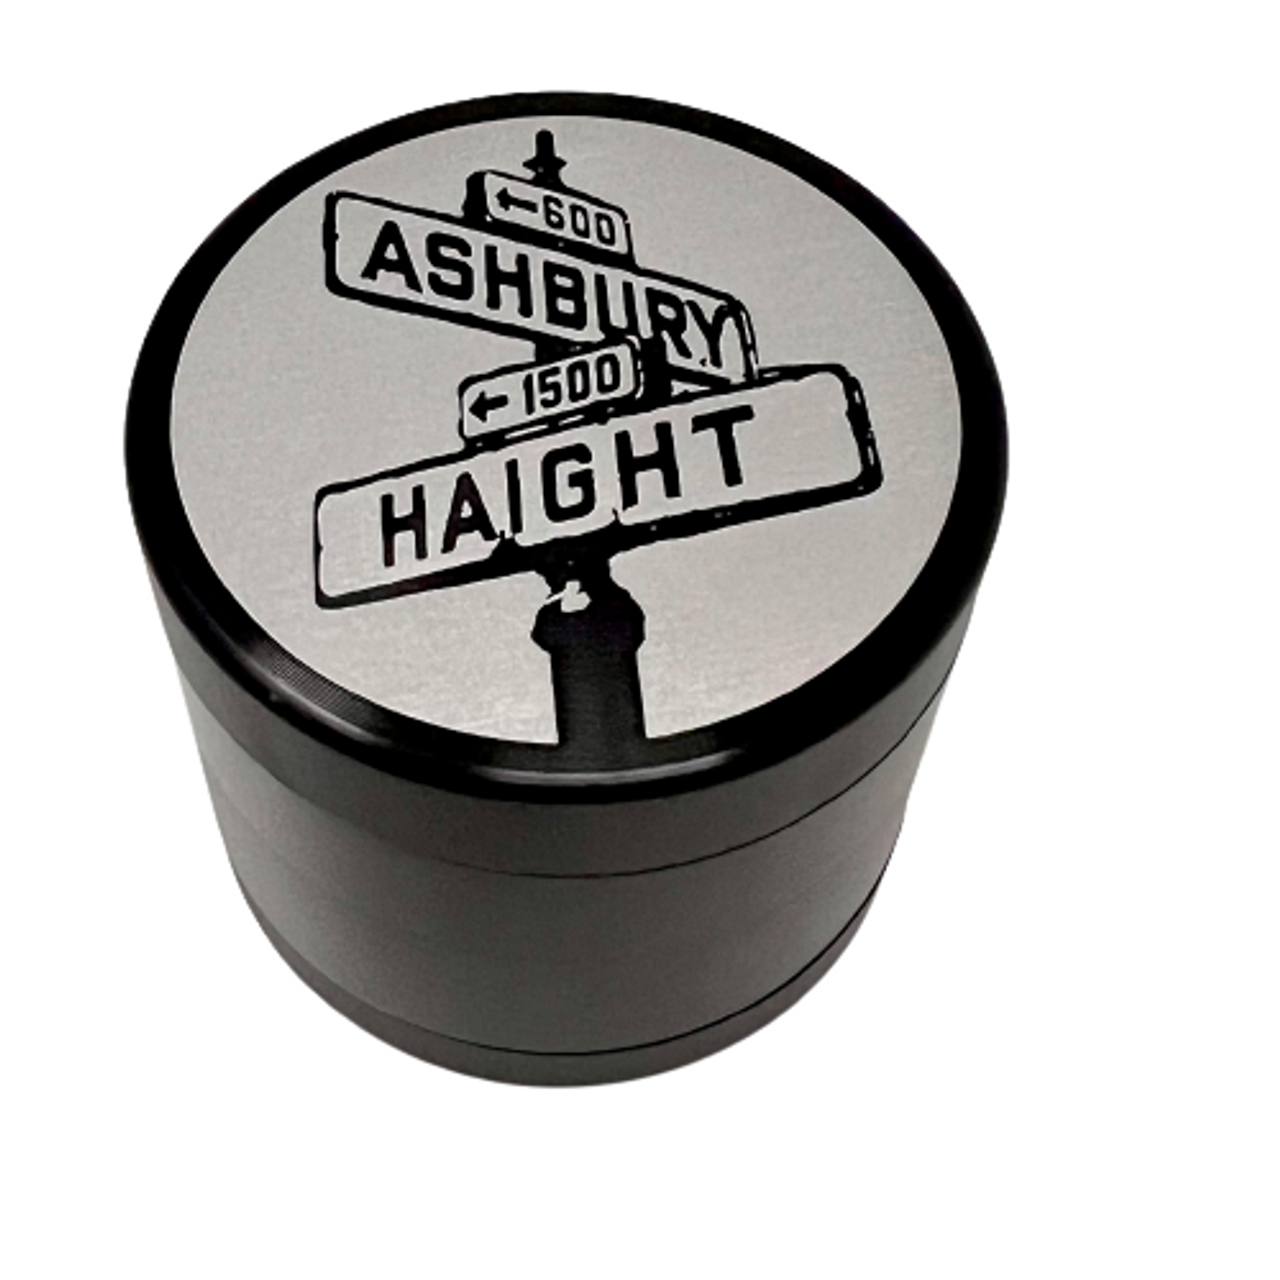 Haight x Ashbury Large 4pc Grinder - Black 63mm